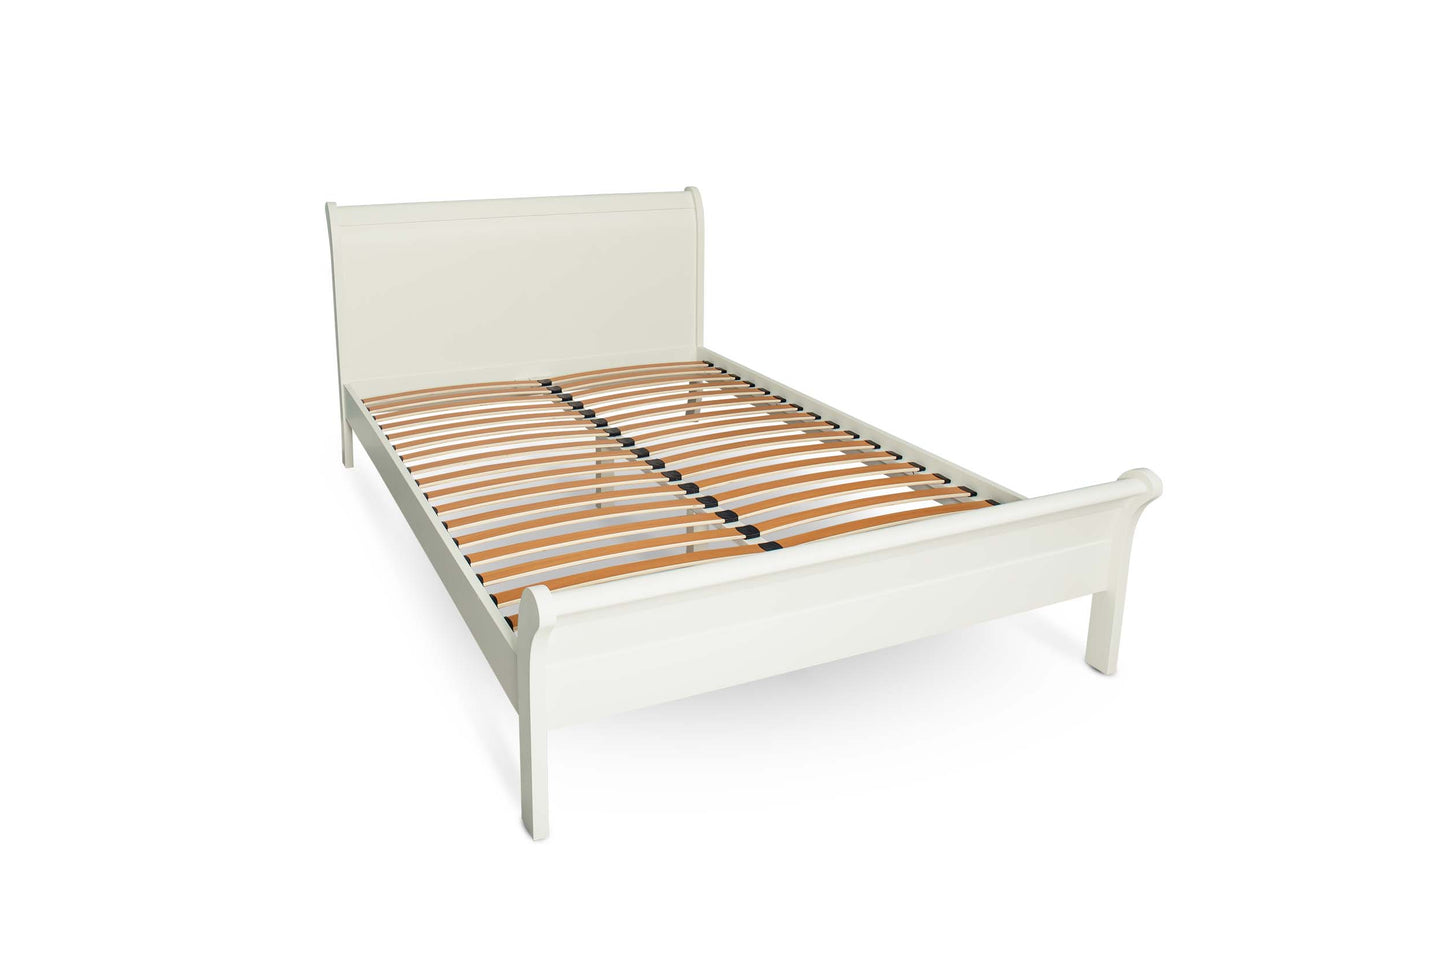 Mayfield Bed Frame - 6ft Super King - Soft White